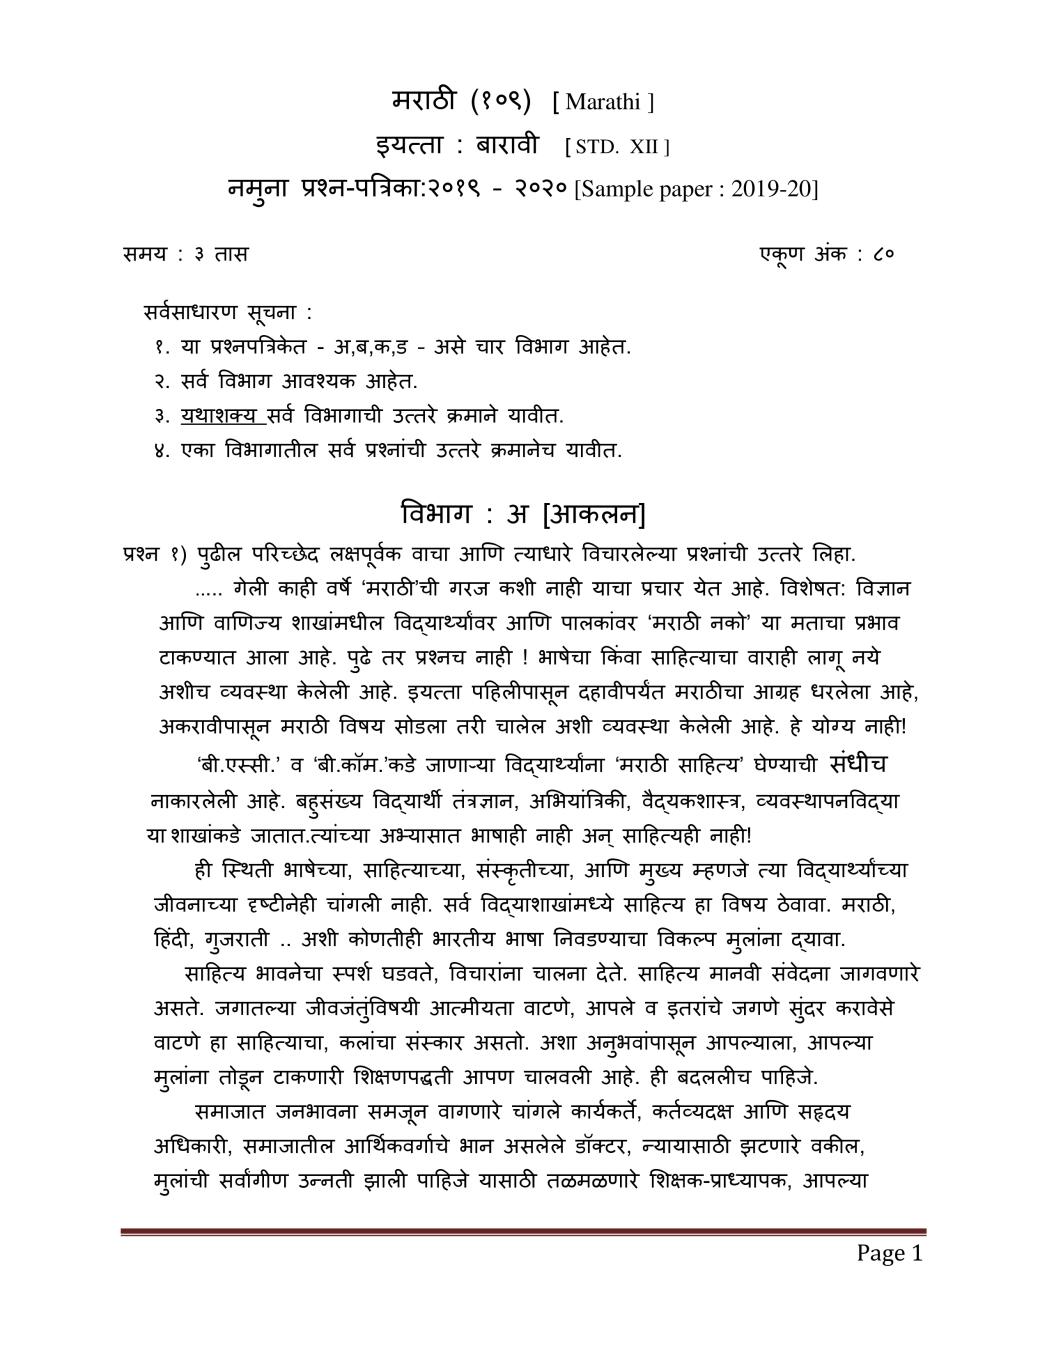 marathi essay topics for class 12